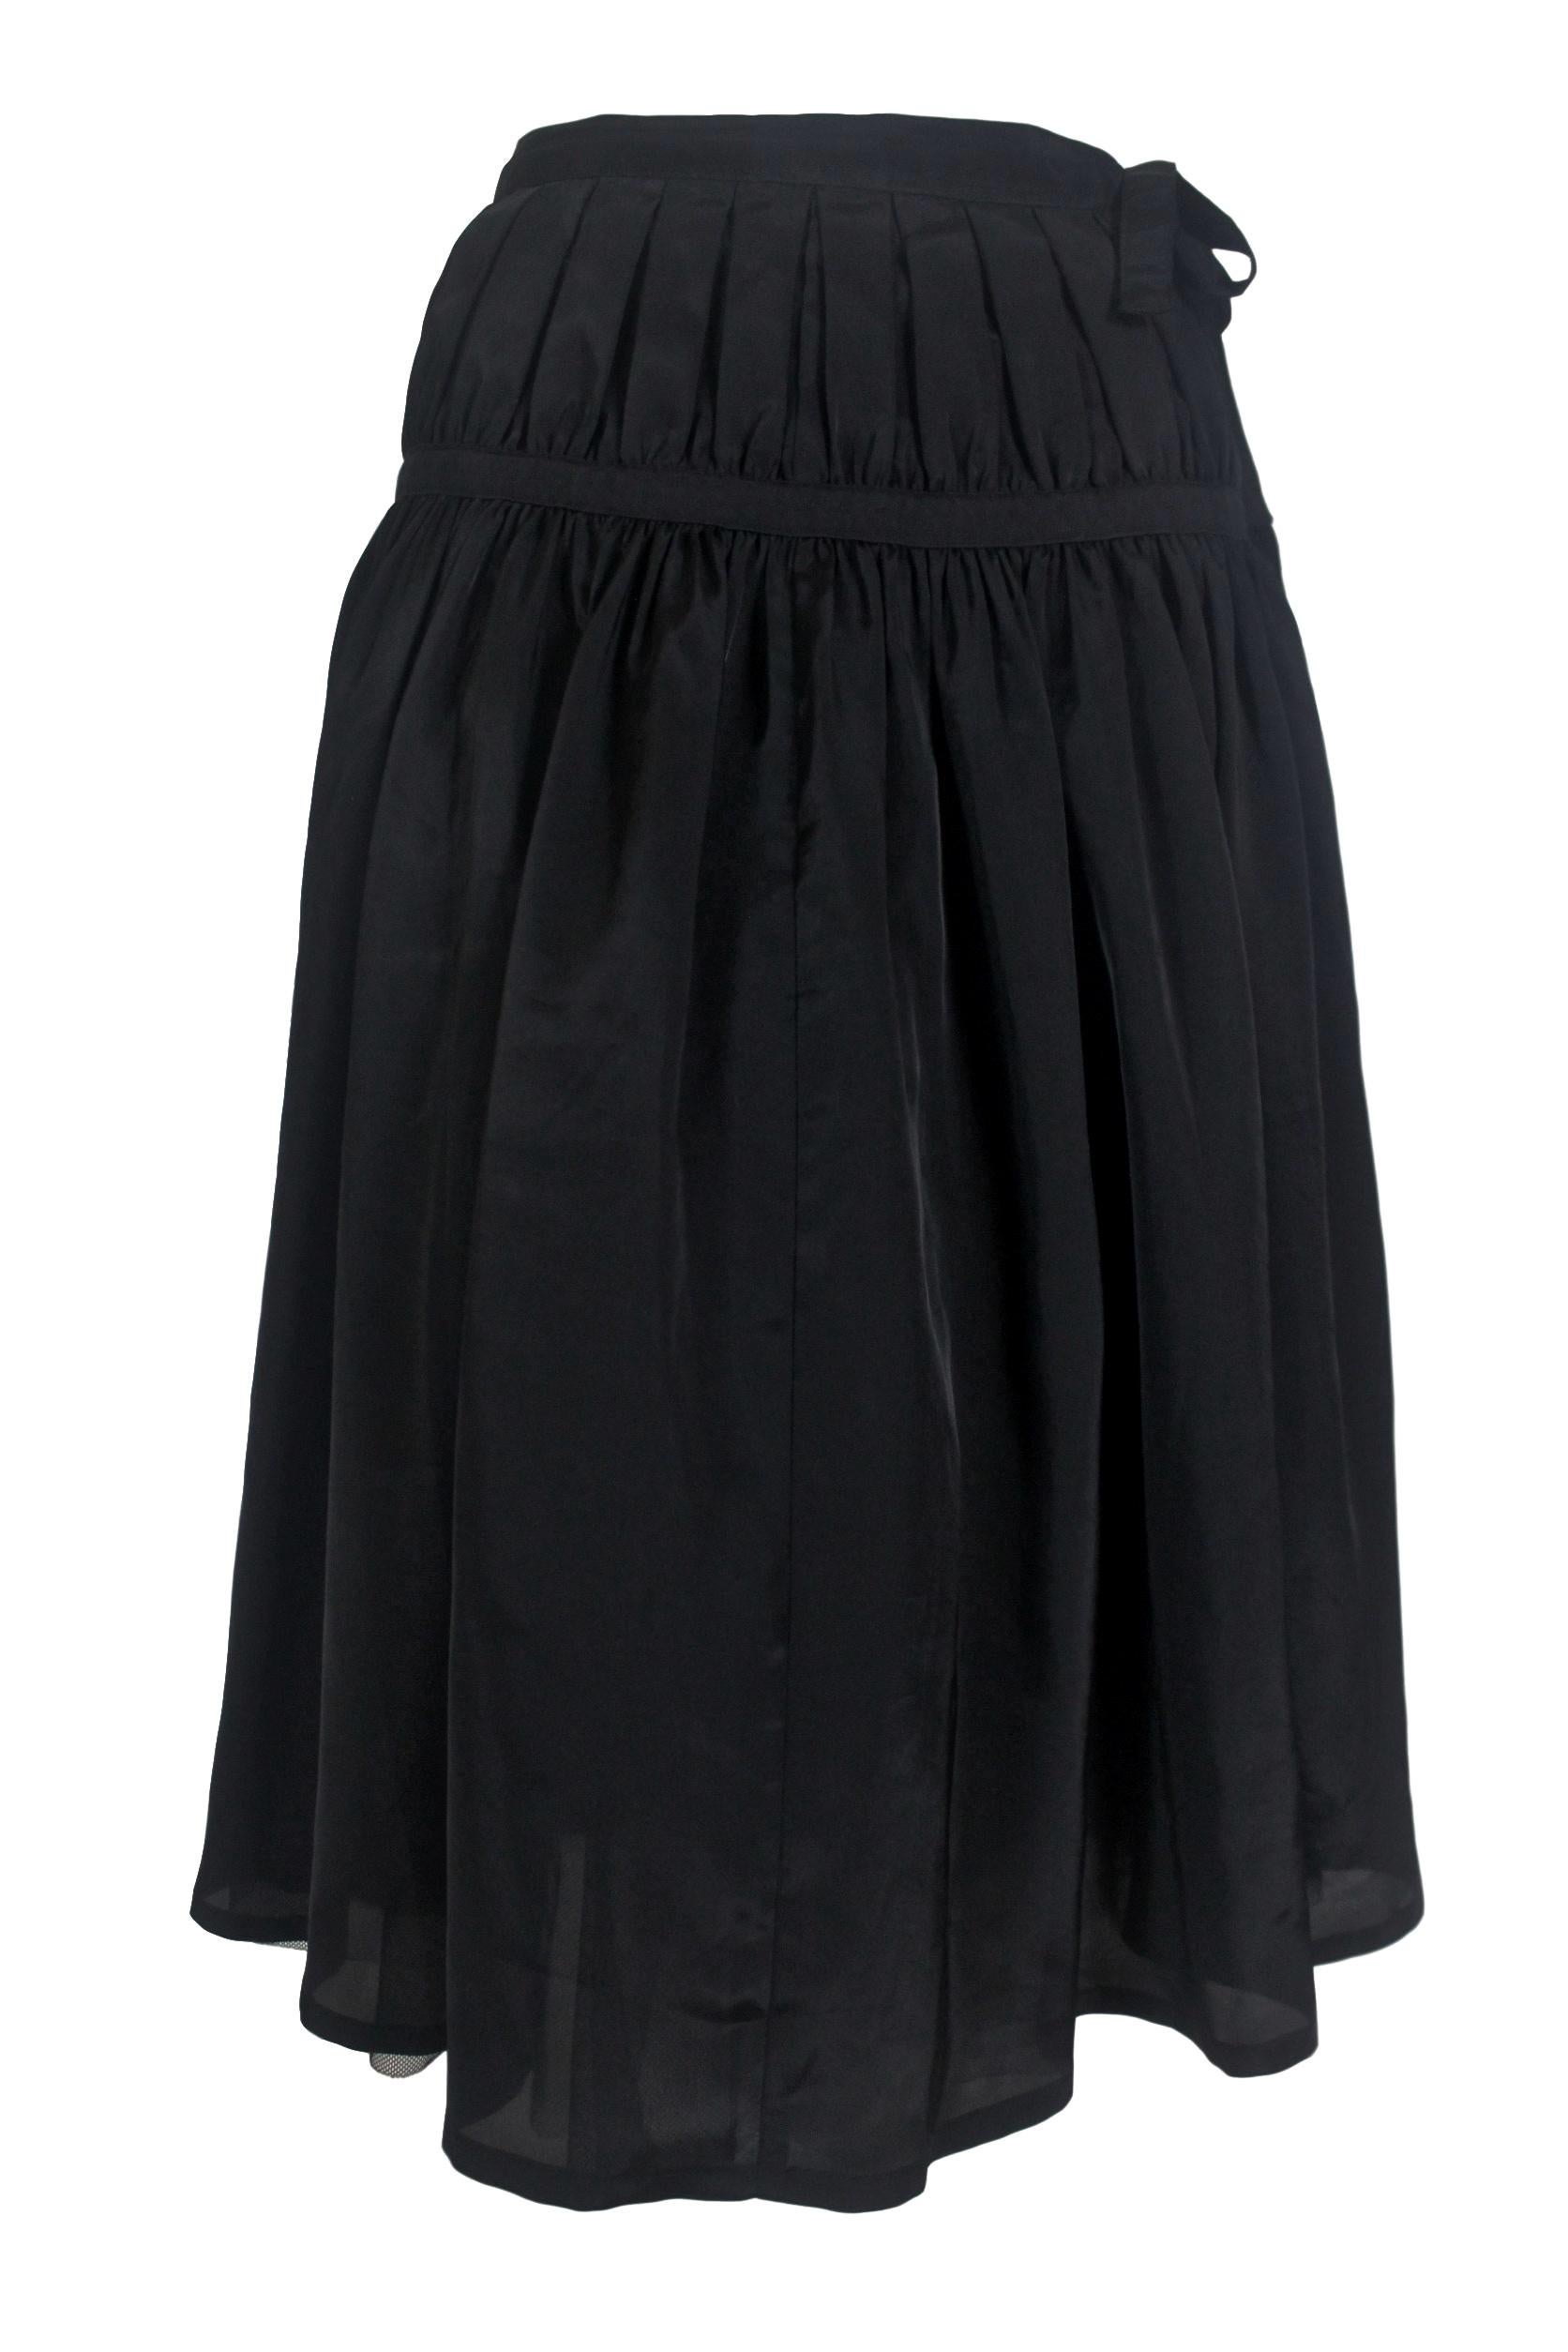 Comme des Garcons Tricot Double Layer Wrap Skirt 2007 For Sale 10